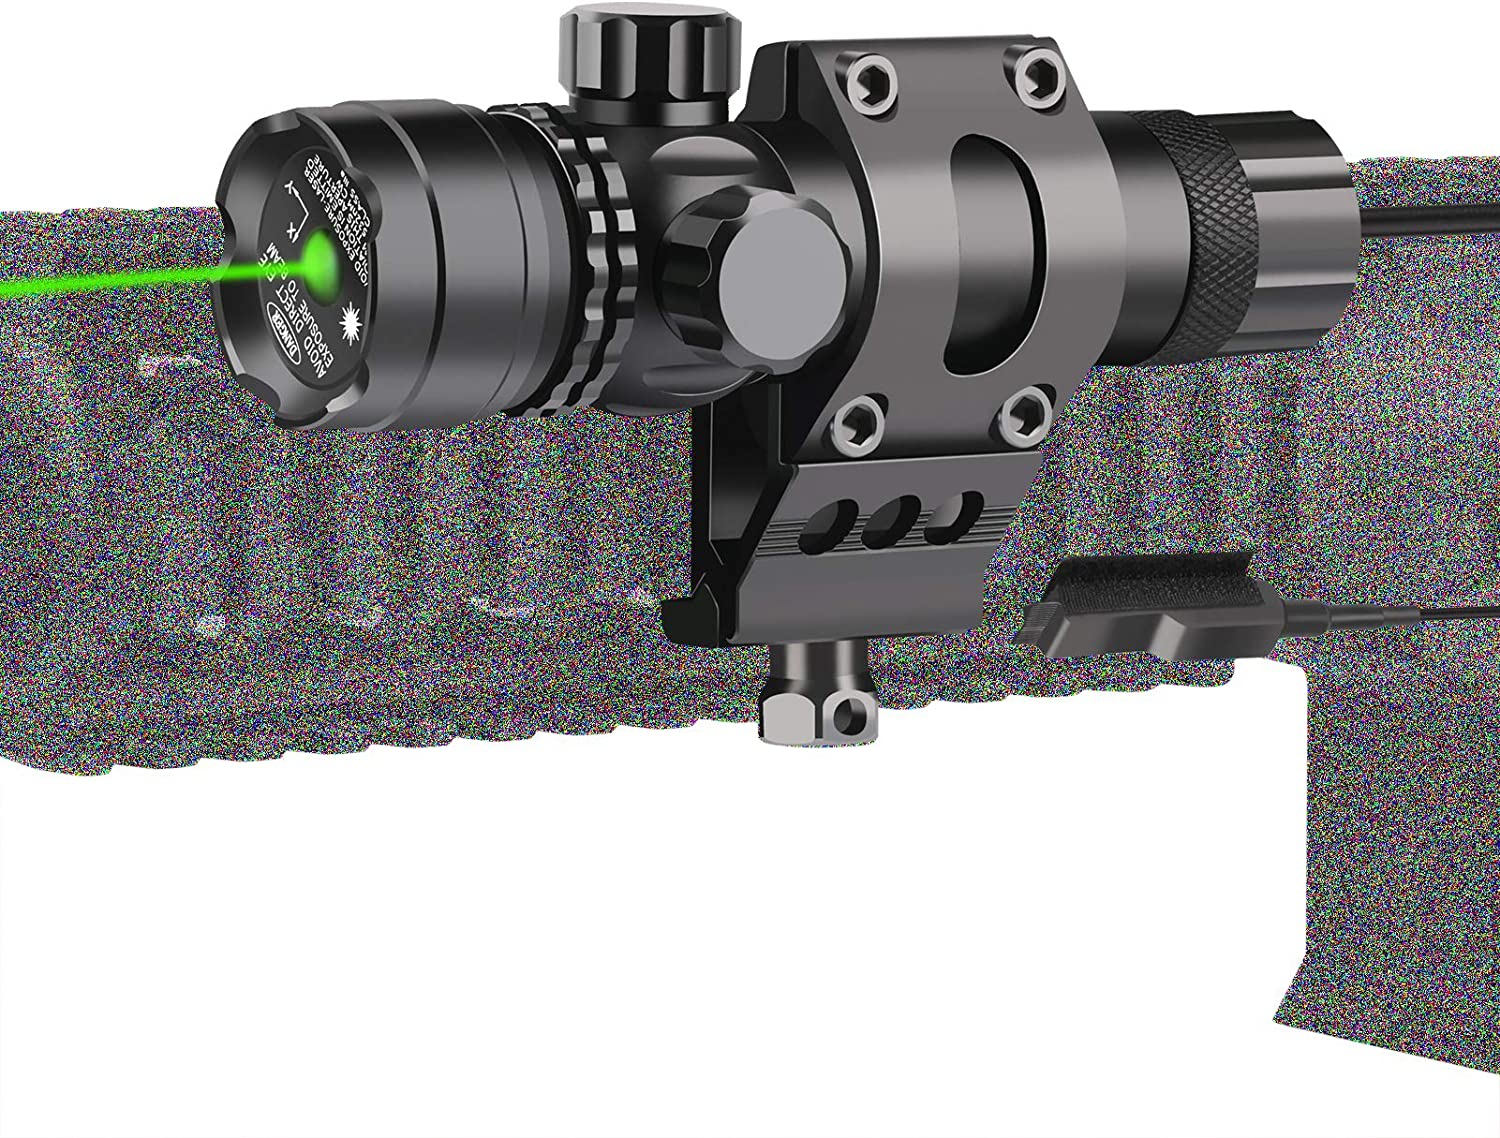 Mirino laser verde Feyachi GL41 - Montaggio su guida Picatinny